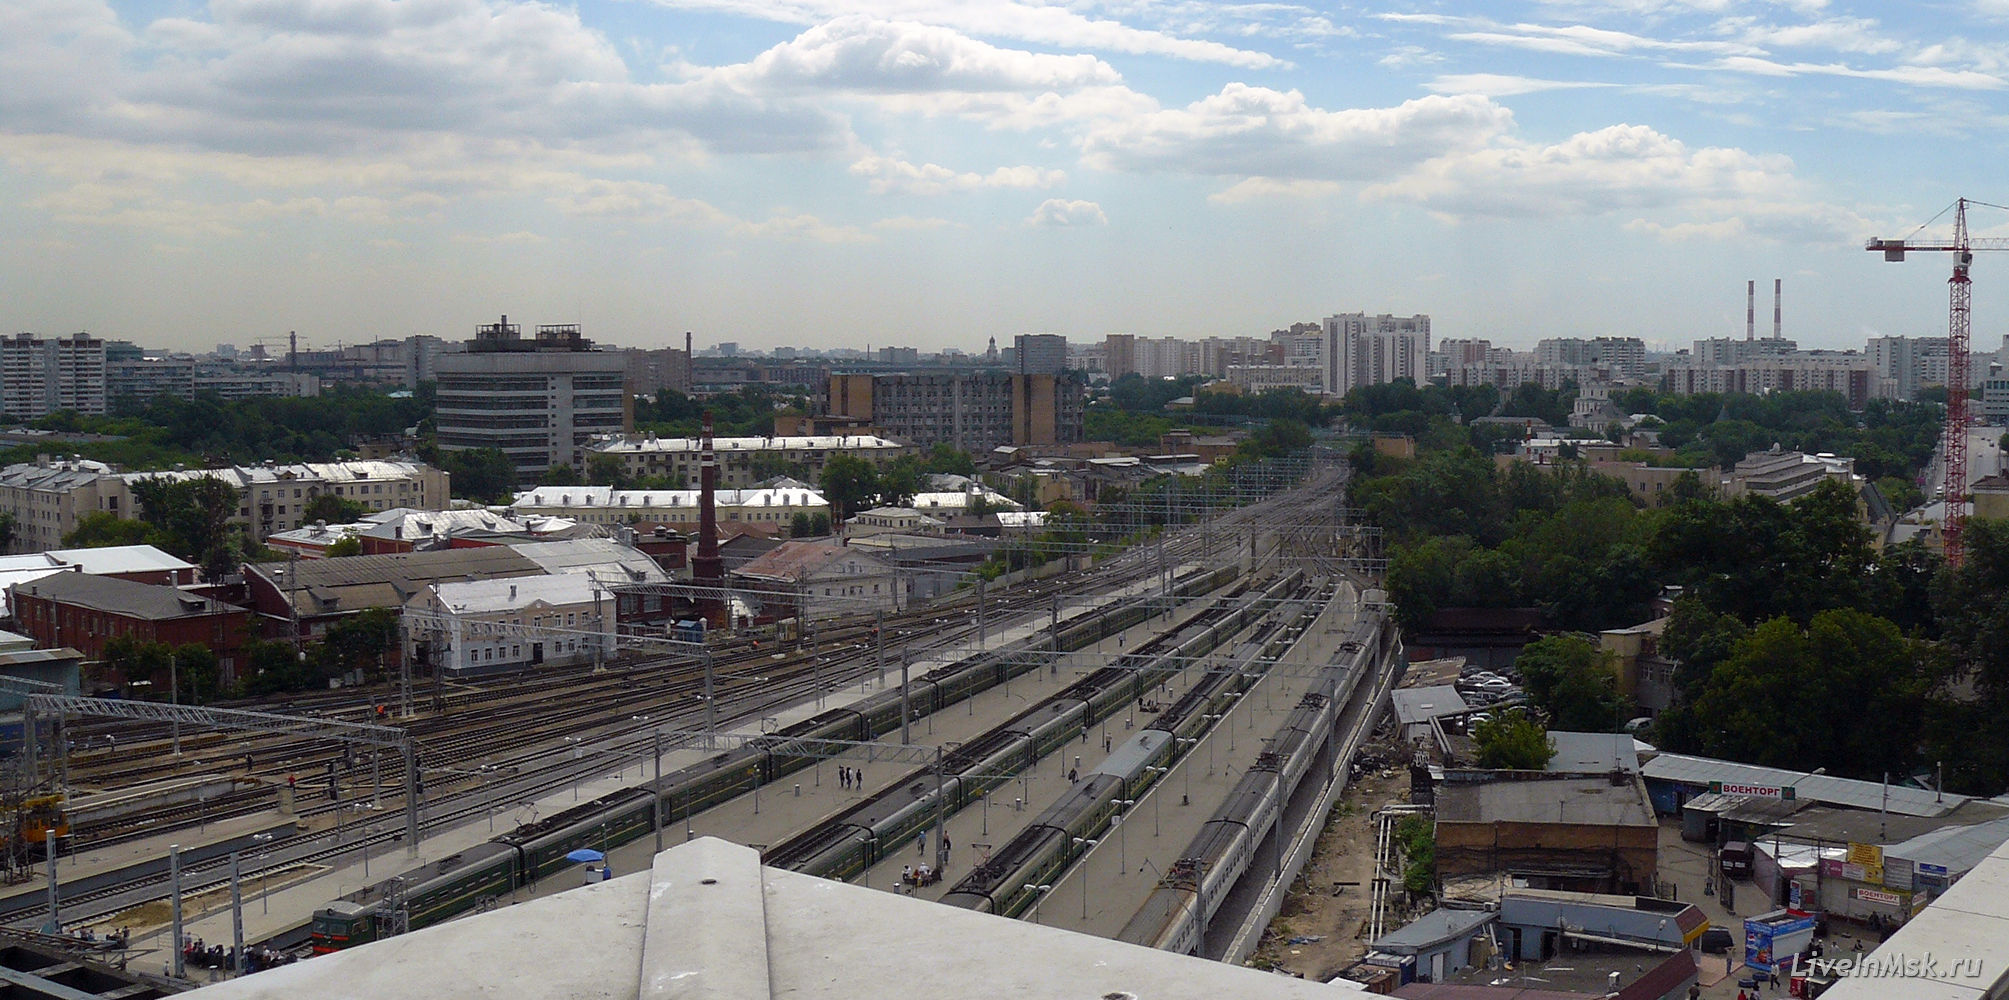 Курский вокзал, фото 2014 года